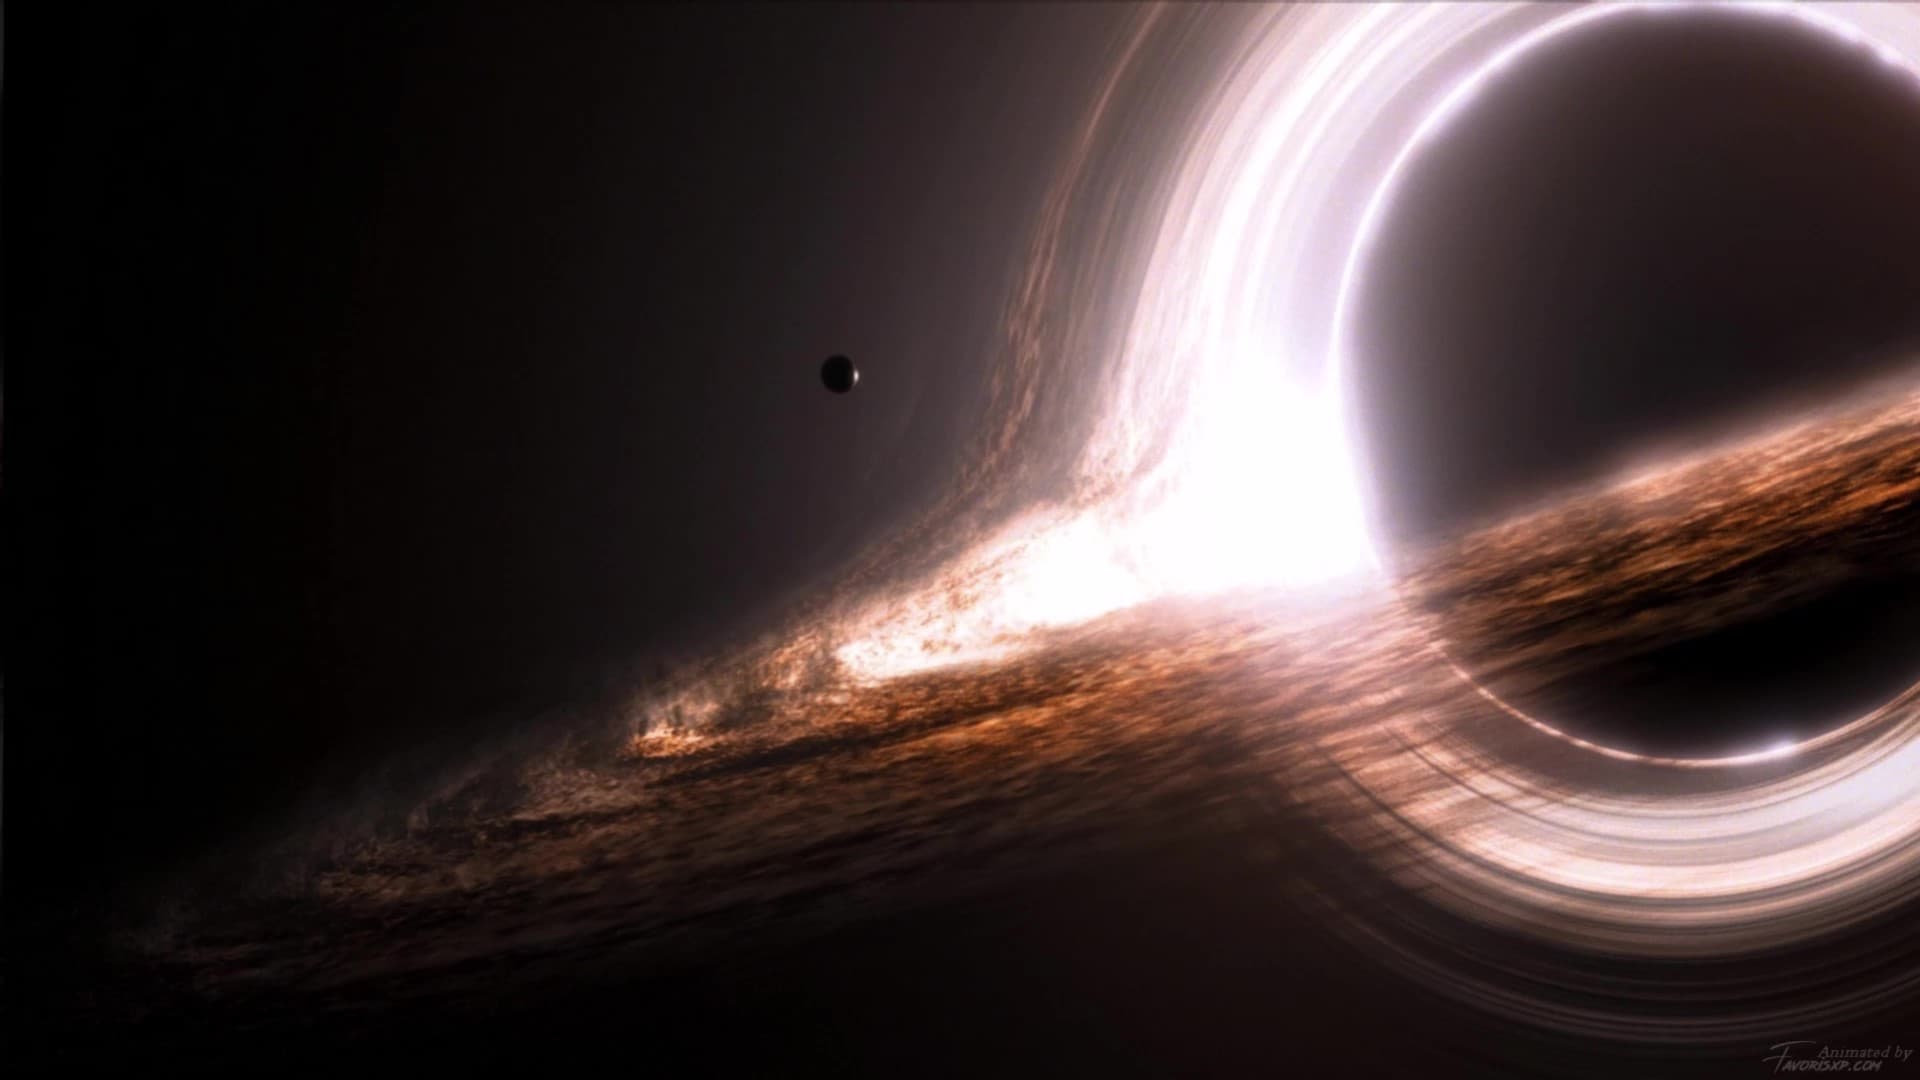 Interstellar gargantua black hole live wallpaper by favorisxp on